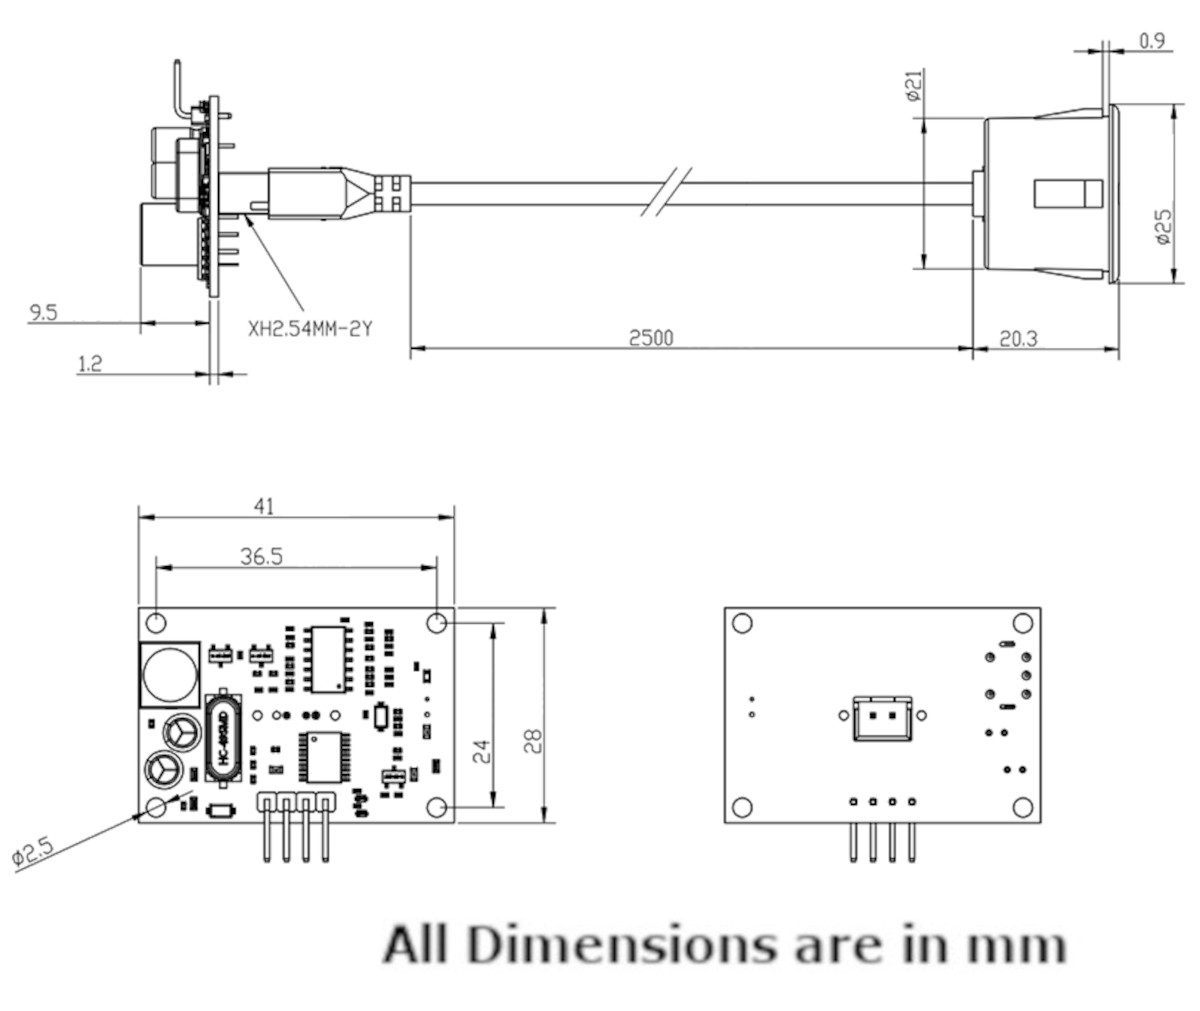 PB-A06 Ultrasonic Distance Sensor Dimensions